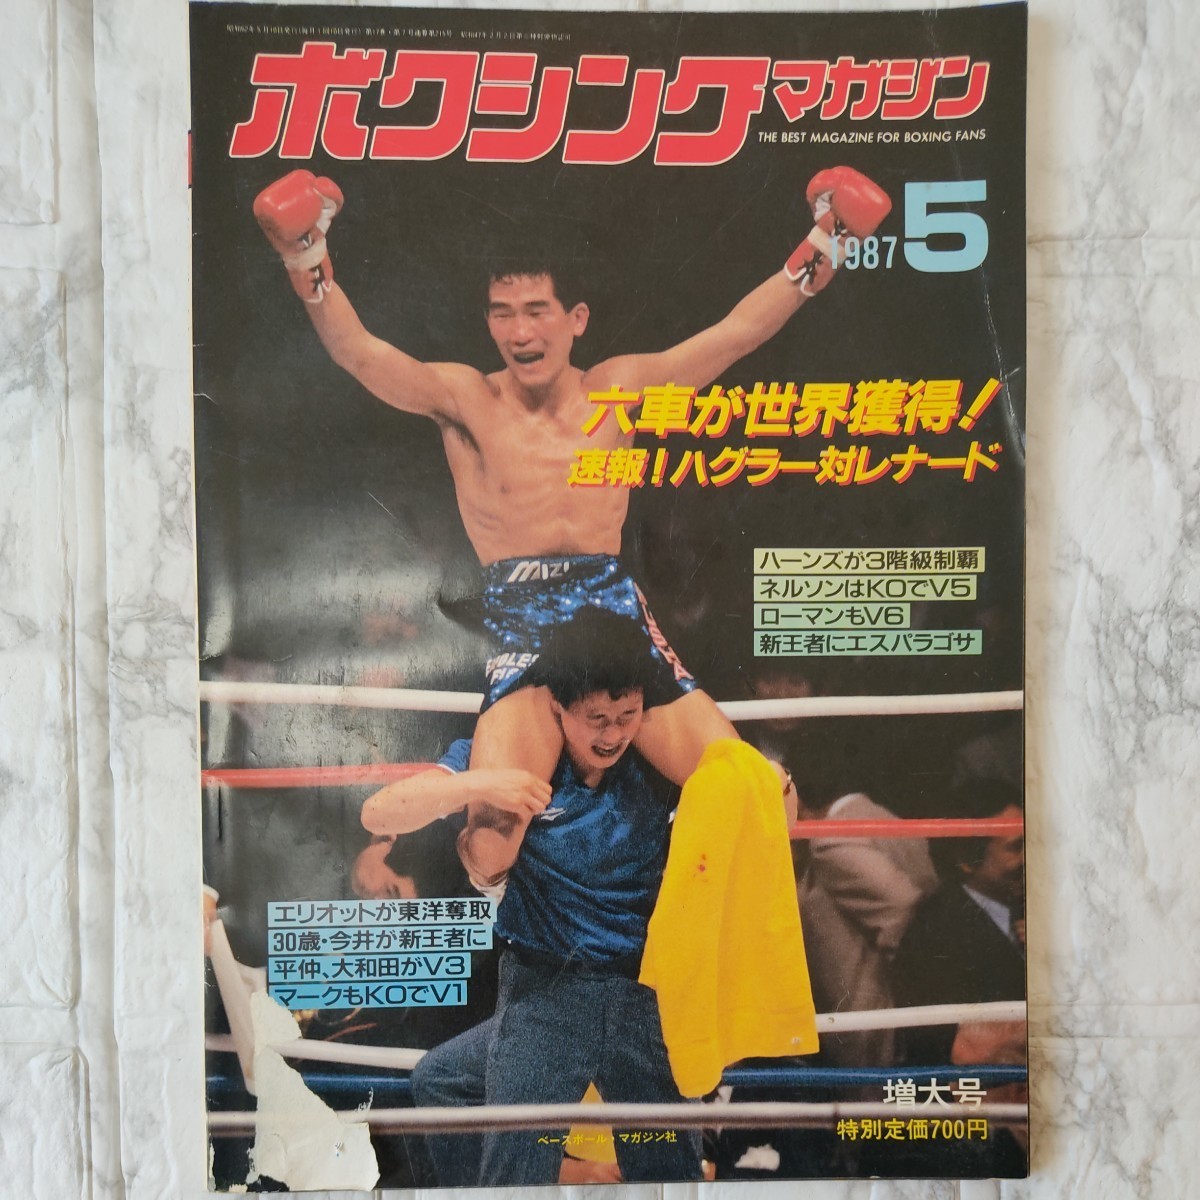  бокс журнал бокс * журнал 1987 год 1 месяц номер ~12 месяц номер (2 месяц номер нет ) состояние плохой 